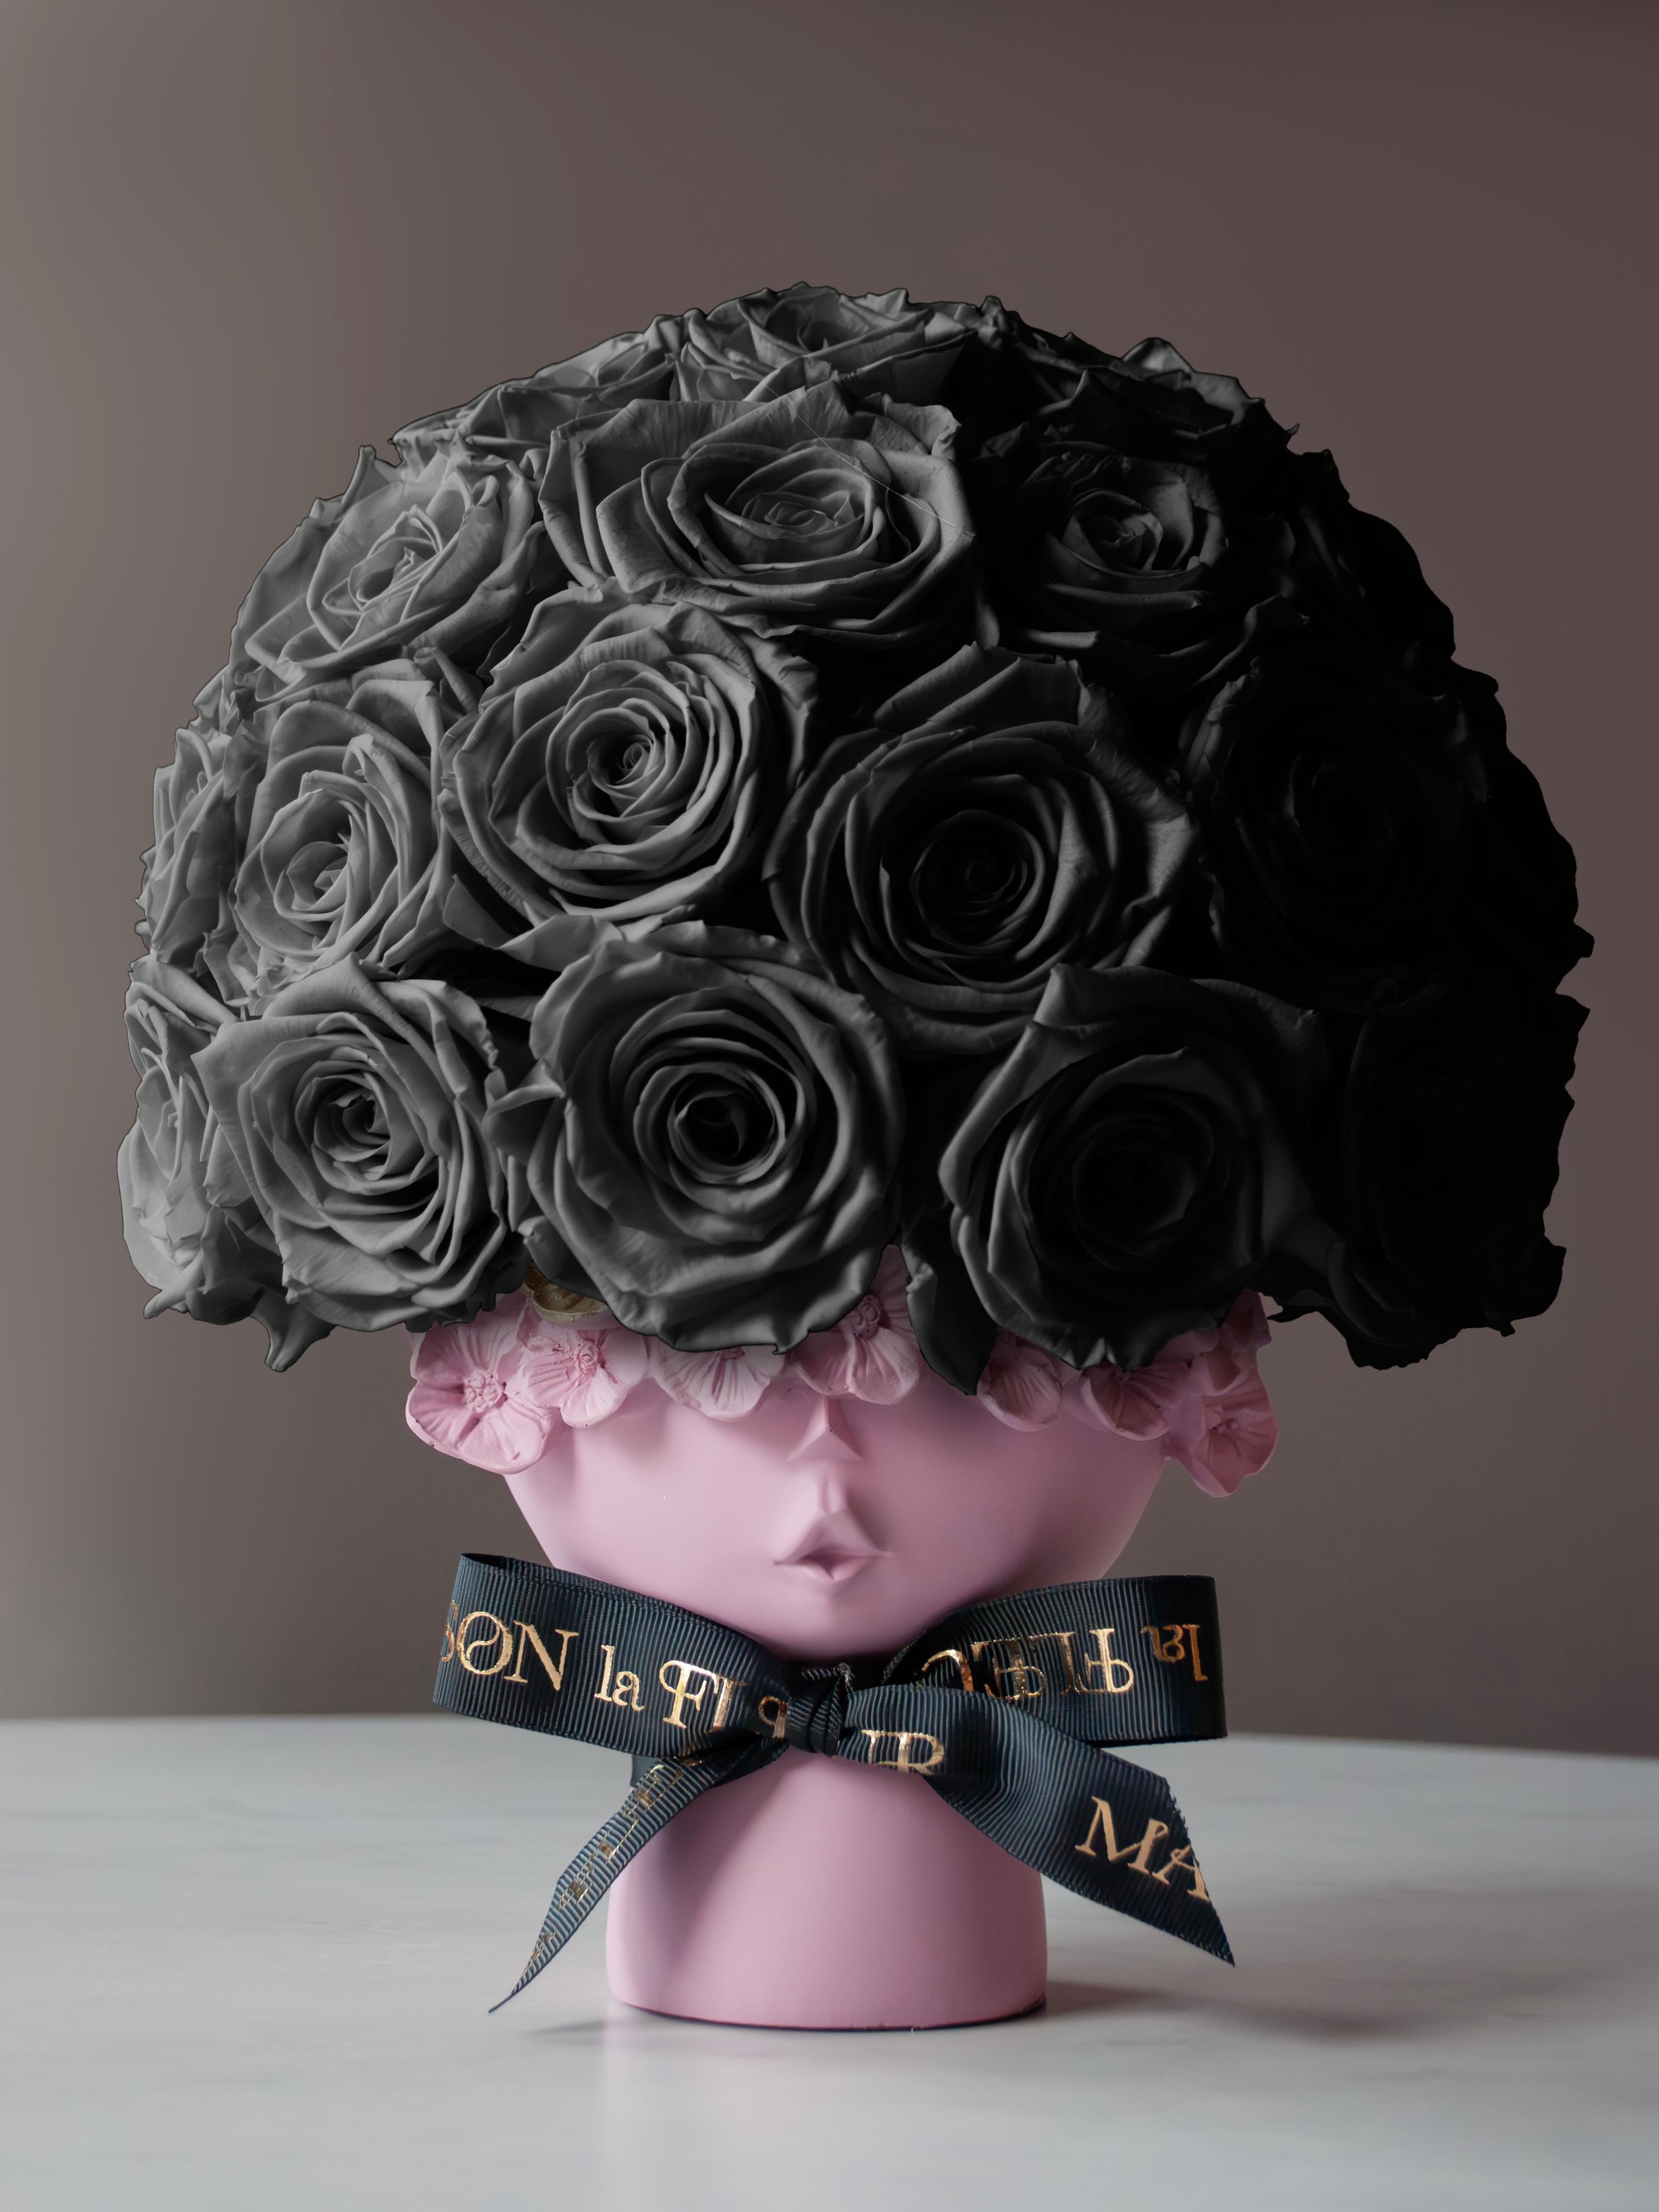 Lady in Bloom - Beautiful Premium Preserved Roses